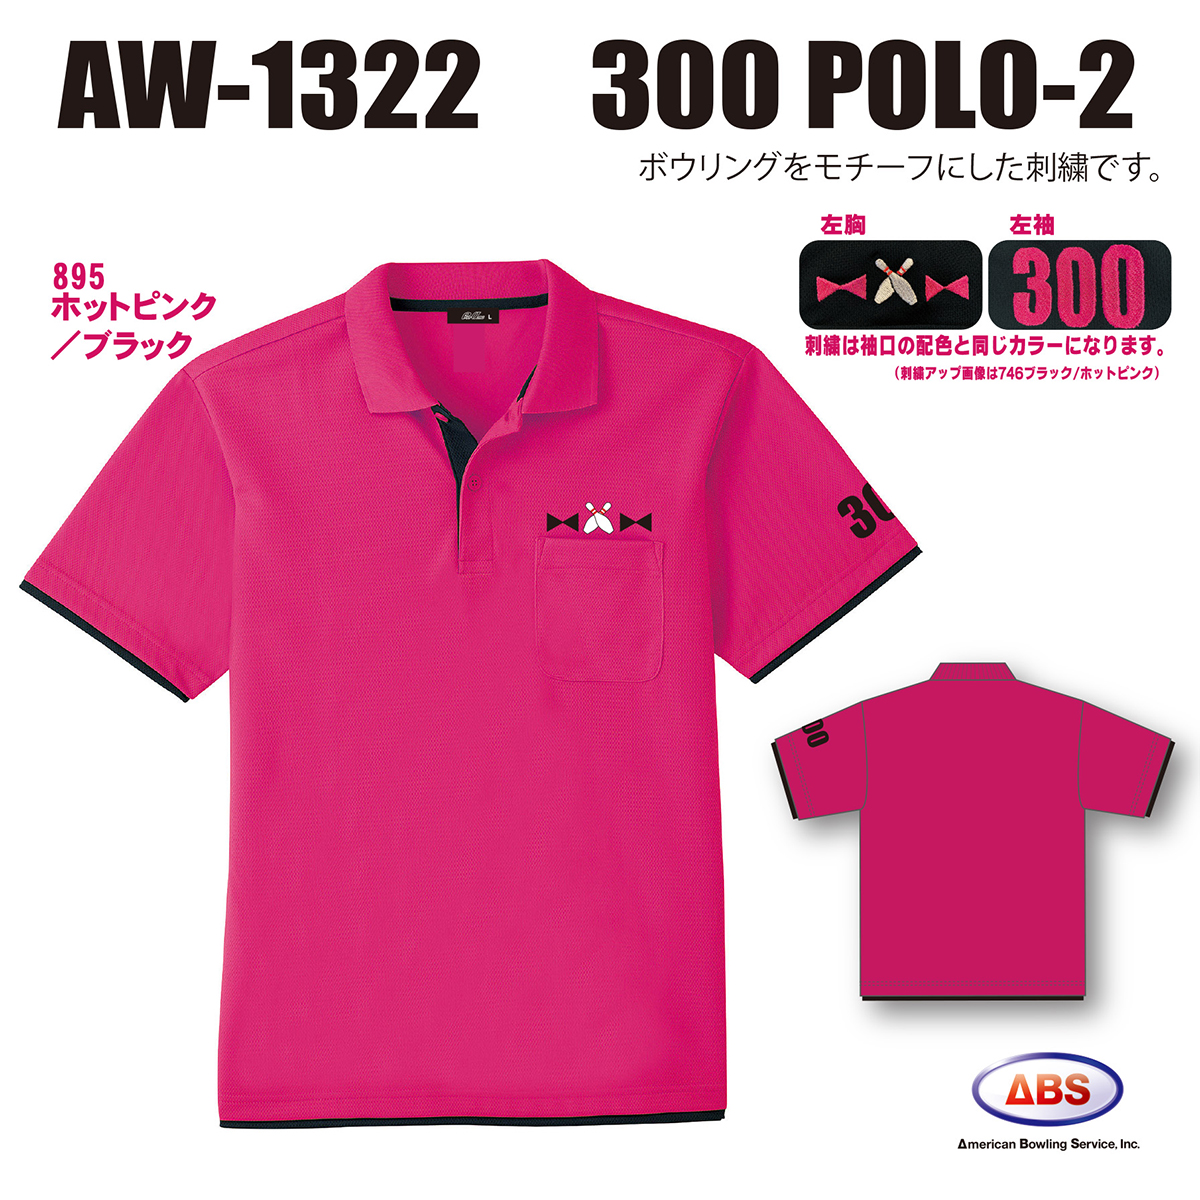 AW-1322 300POLO-2(受注生産) - ウインドウを閉じる